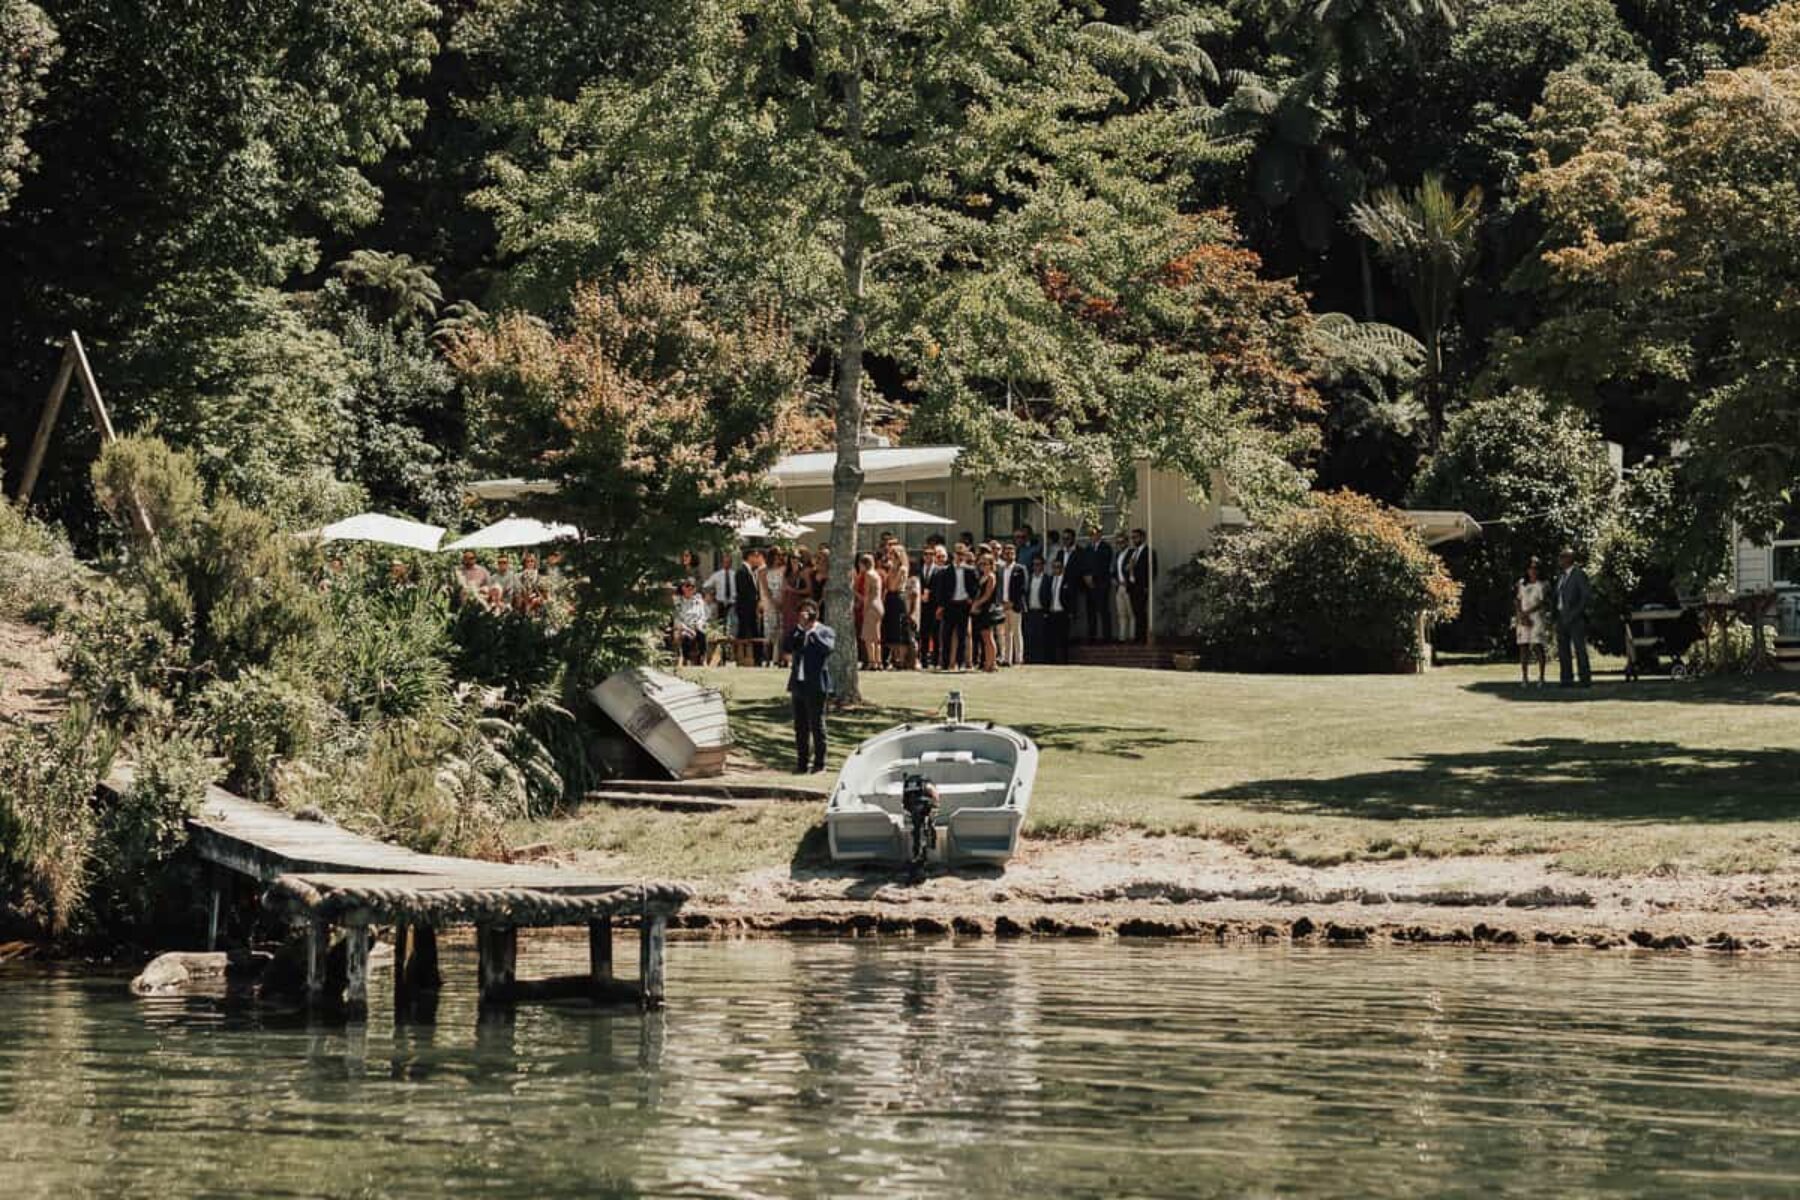 Tipi wedding at Lake Tarawera, Rotorua NZ